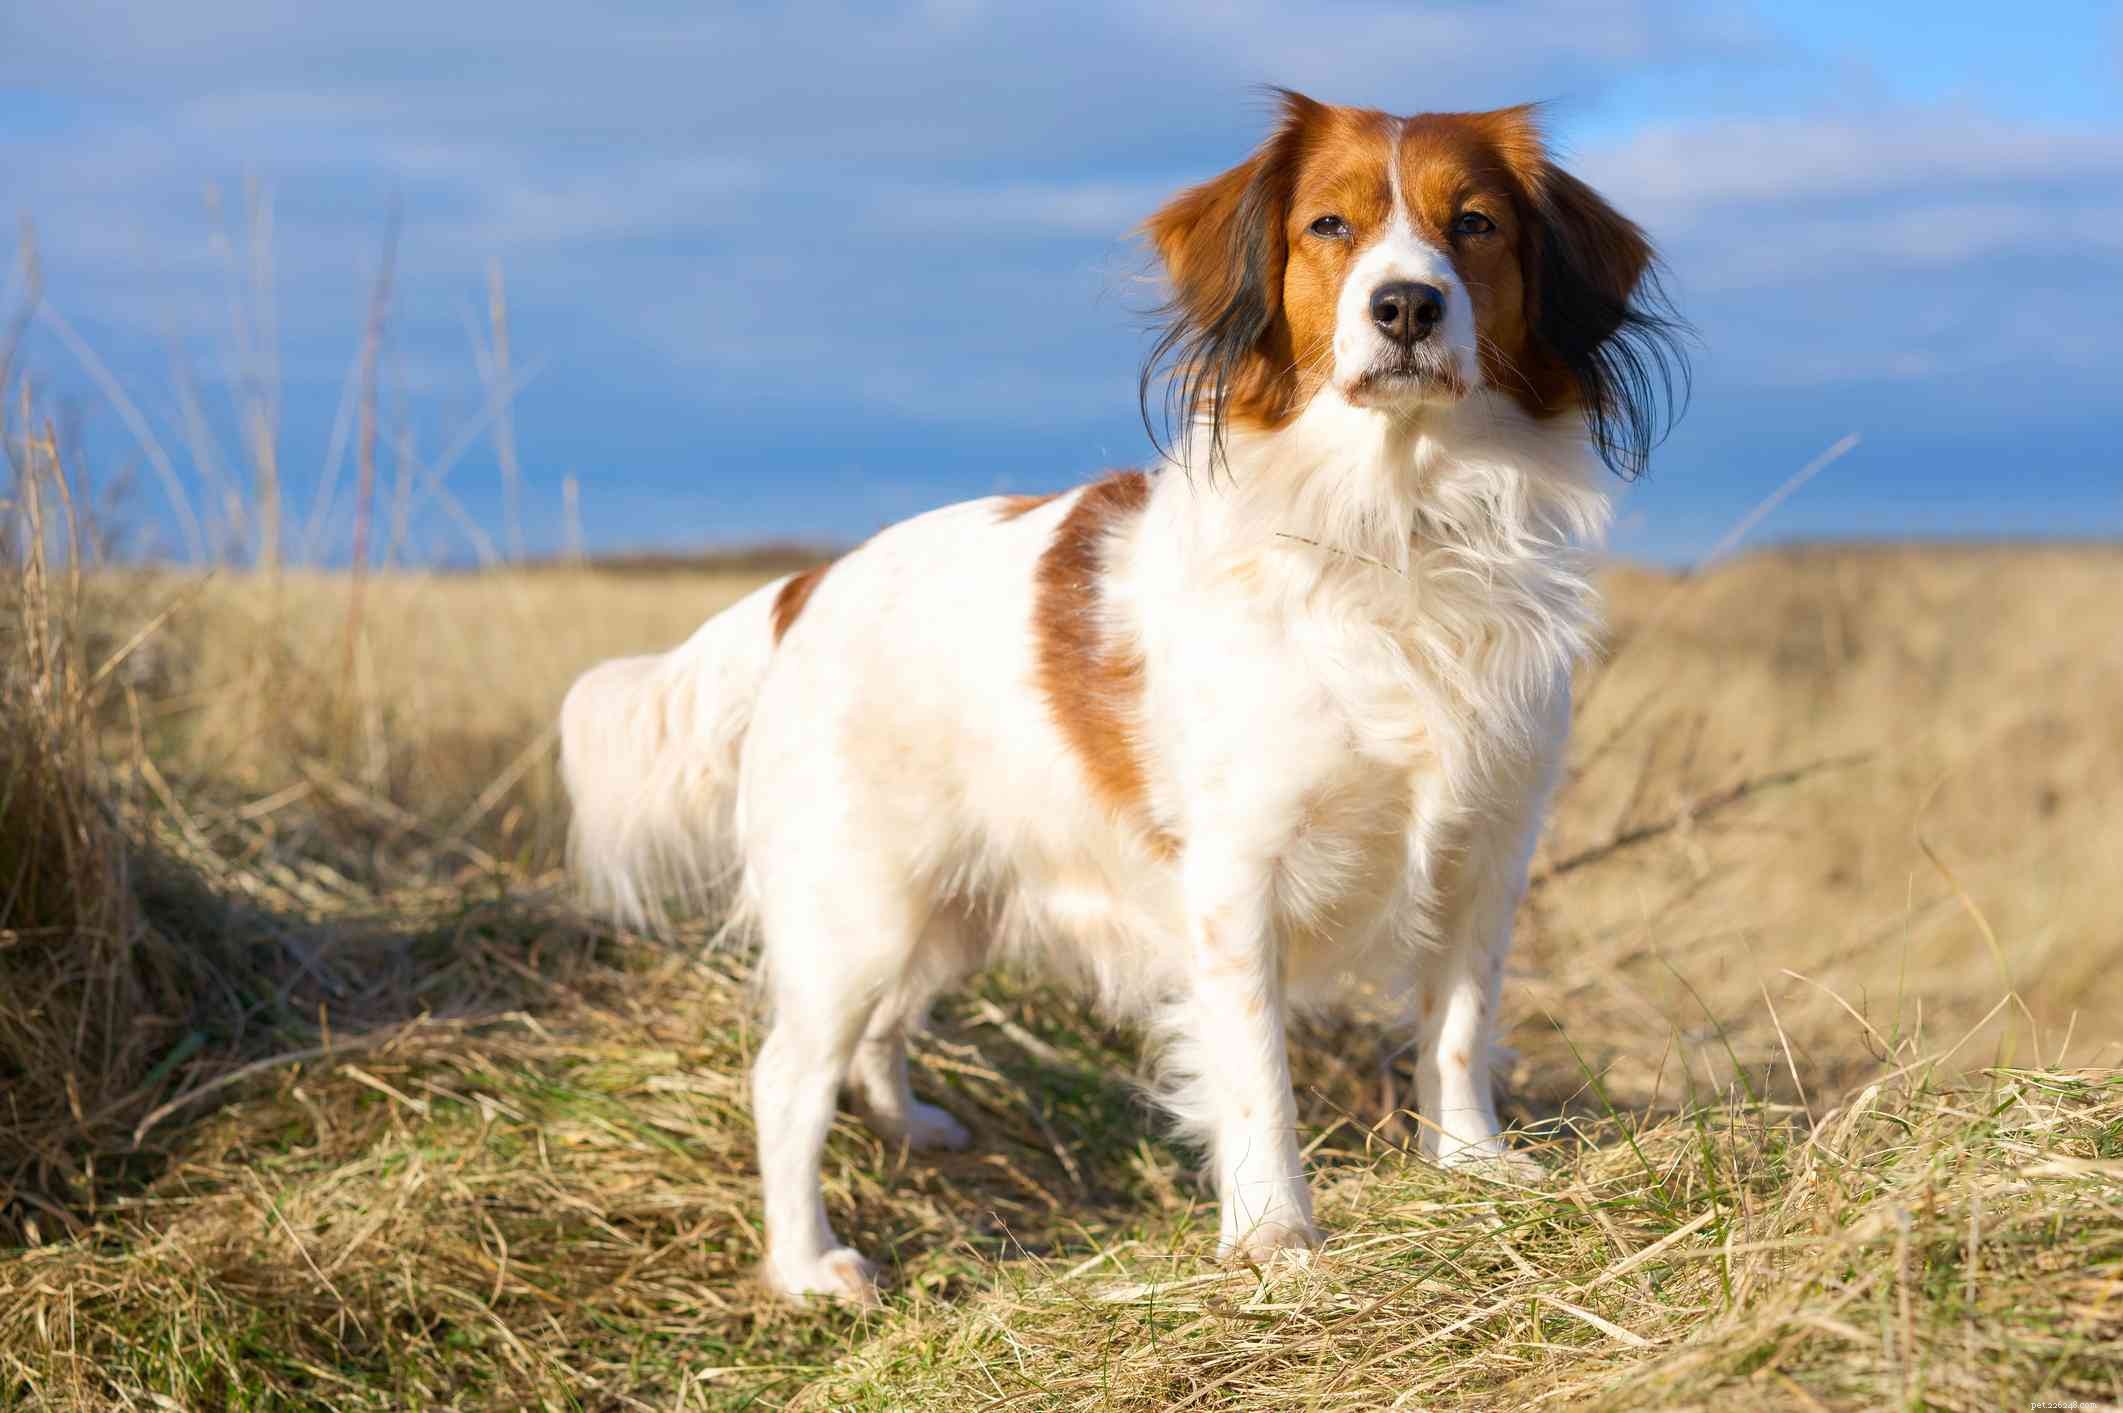 Kooikerhondje (Kooiker):Perfil da raça do cão